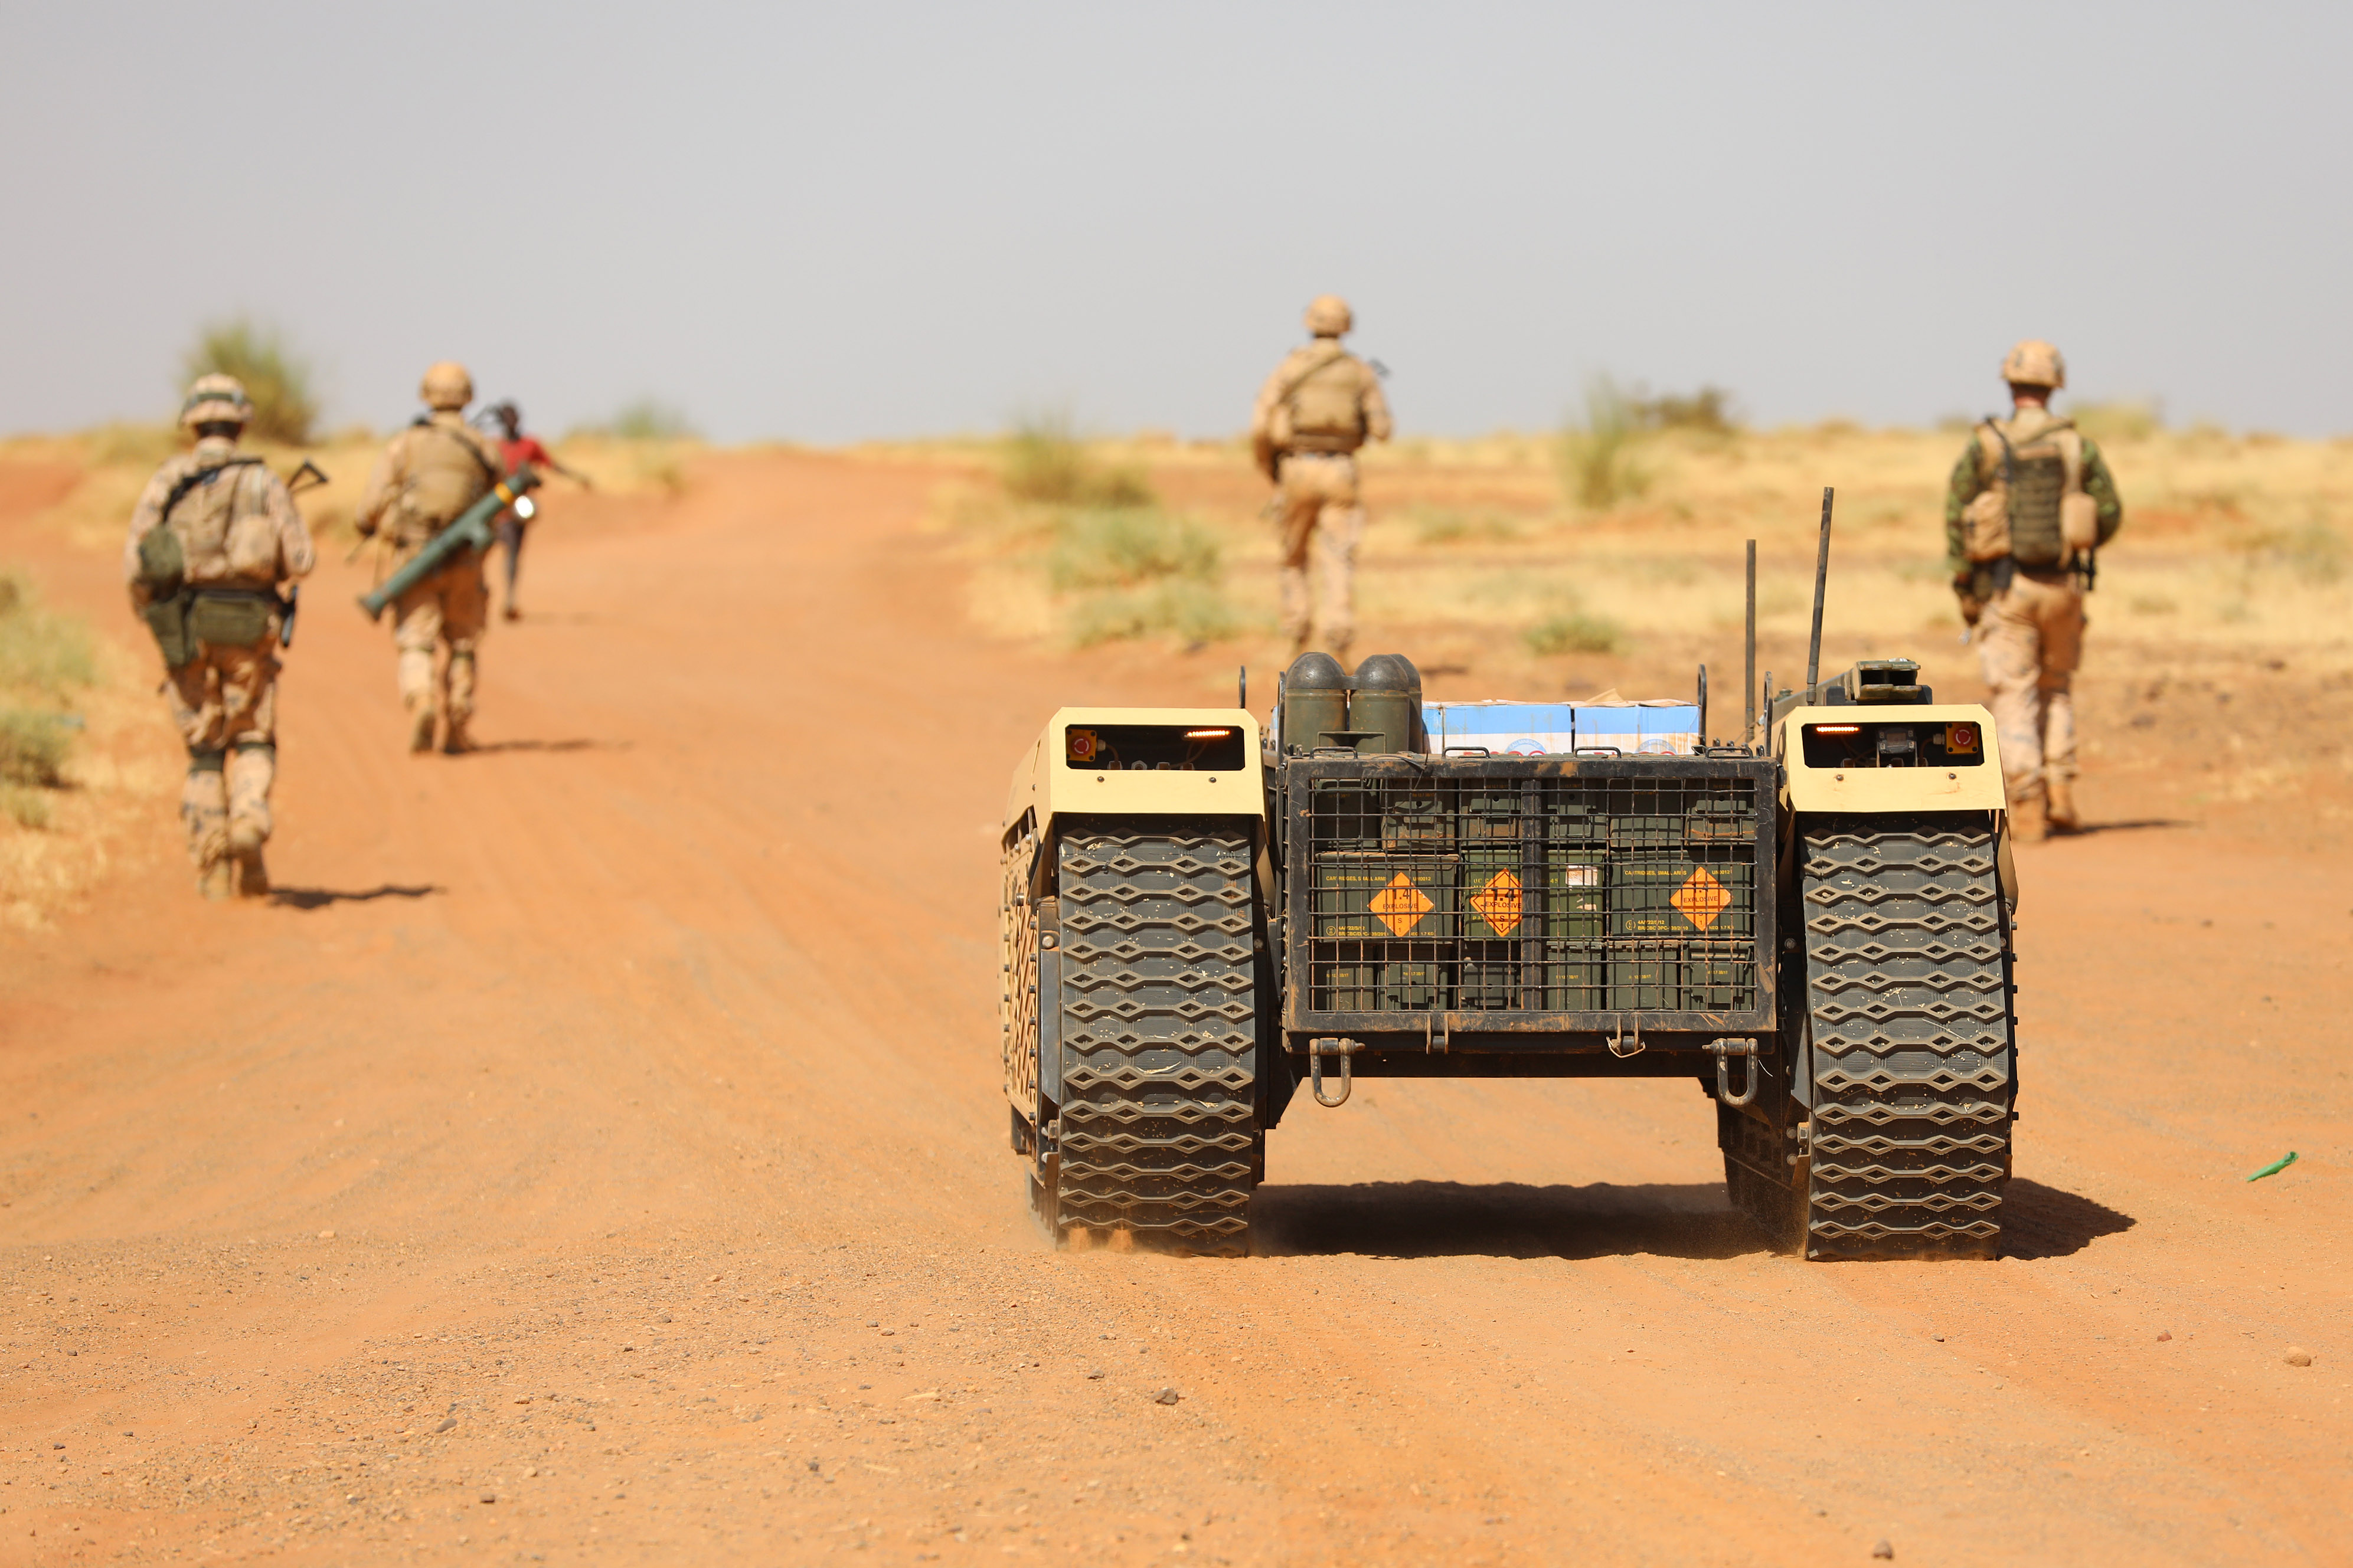 Milrem Robotics' THeMIS UGV Completes First Deployment in Mali